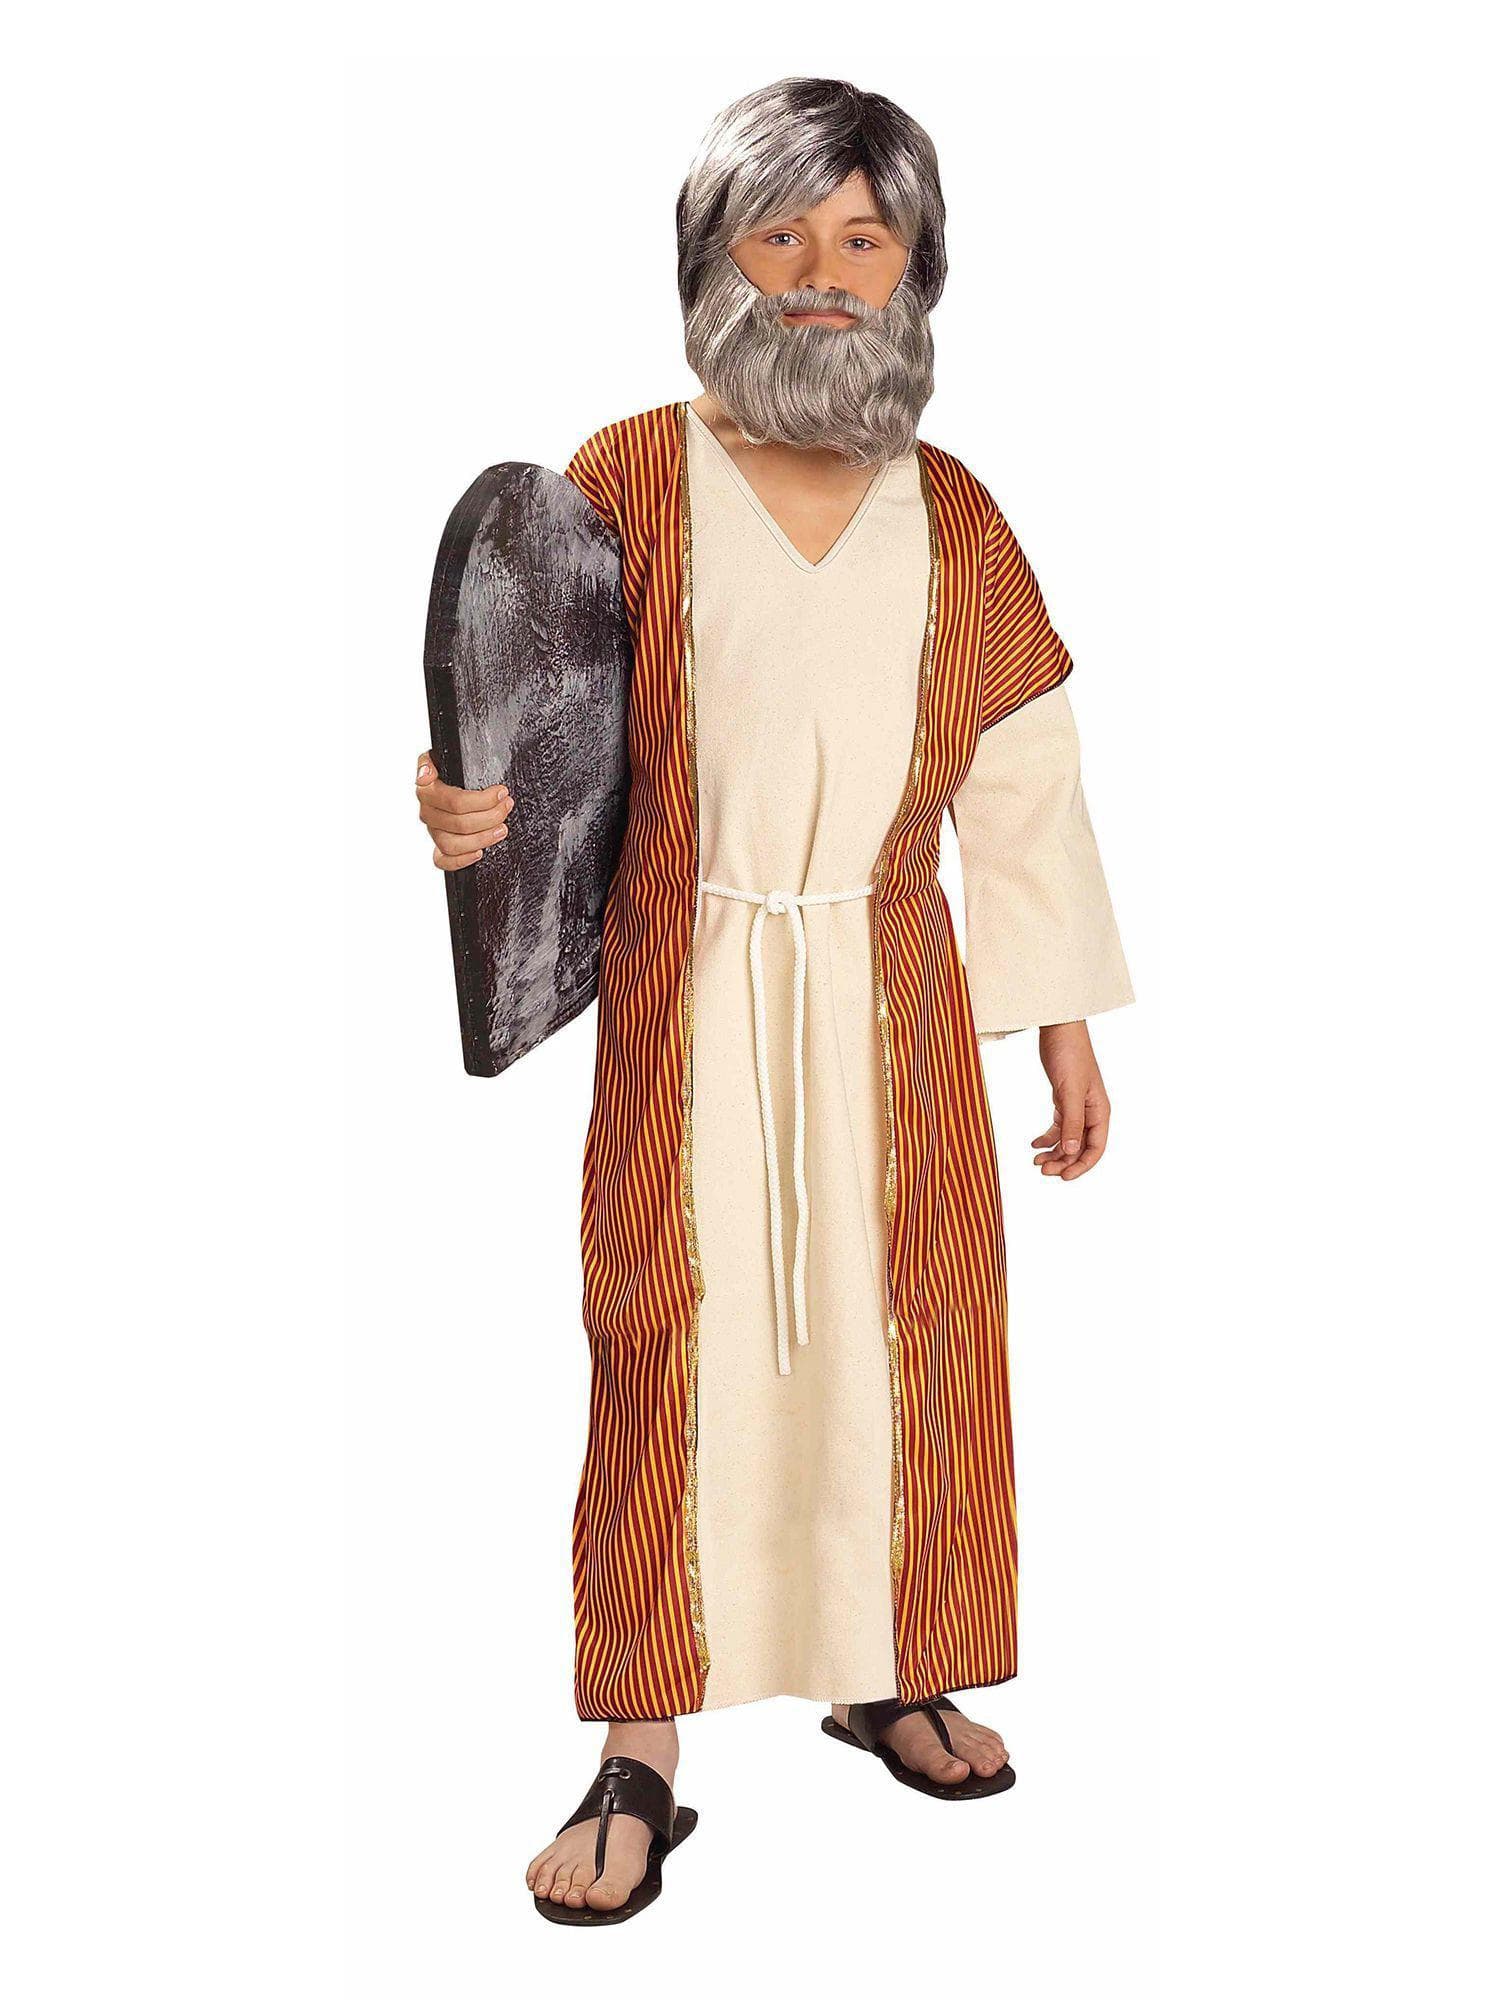 Kid's Moses Costume - costumes.com